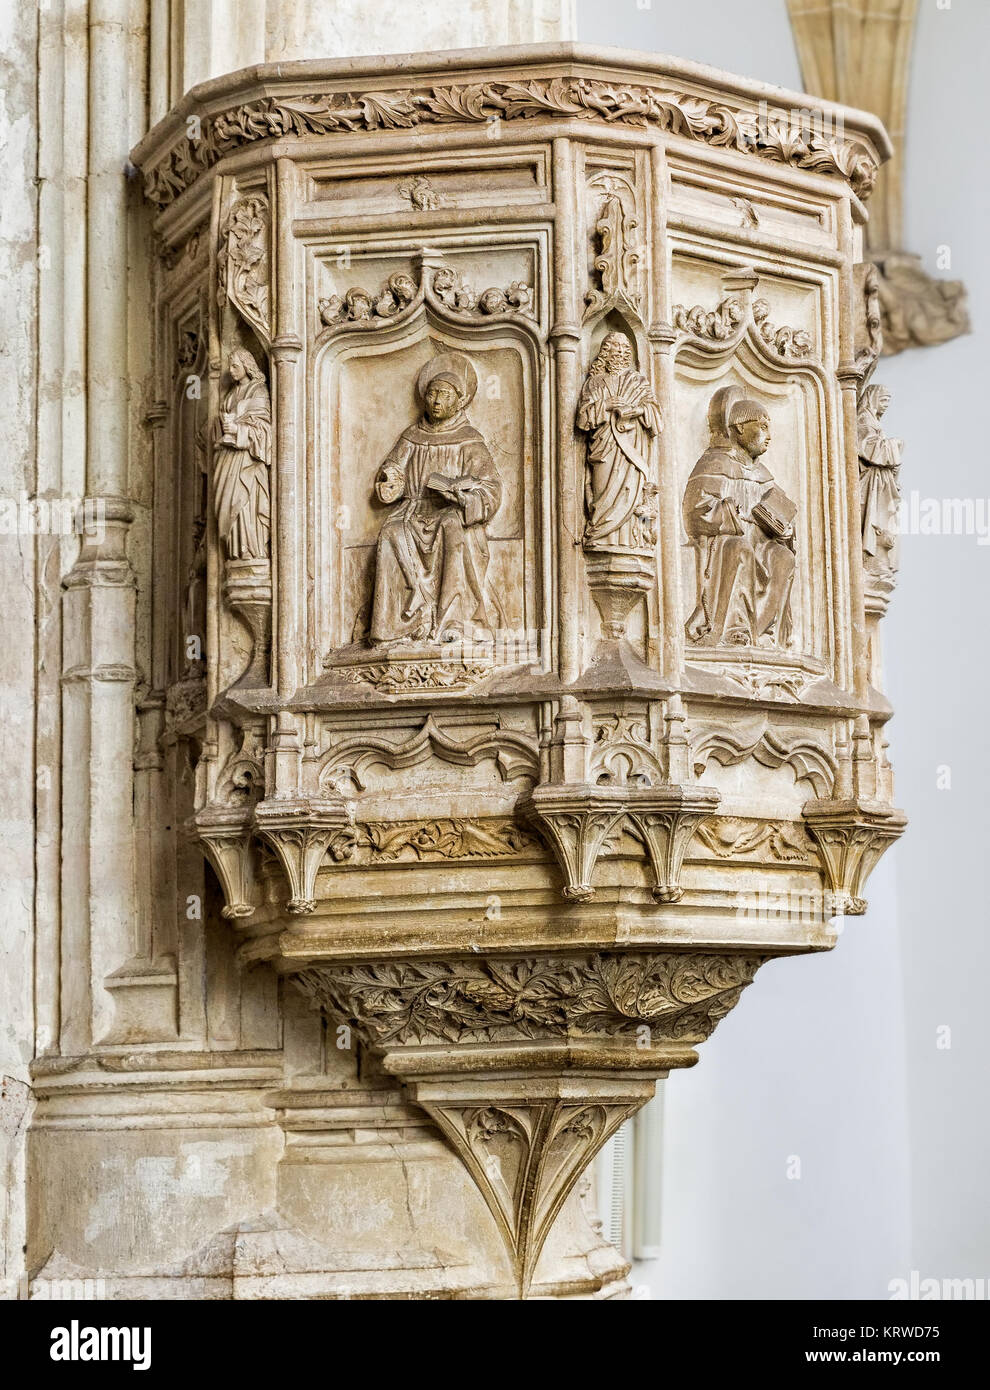 Pulpit in the church of the monastery San Juan de los Reyes in Toledo, Spain. Stock Photo